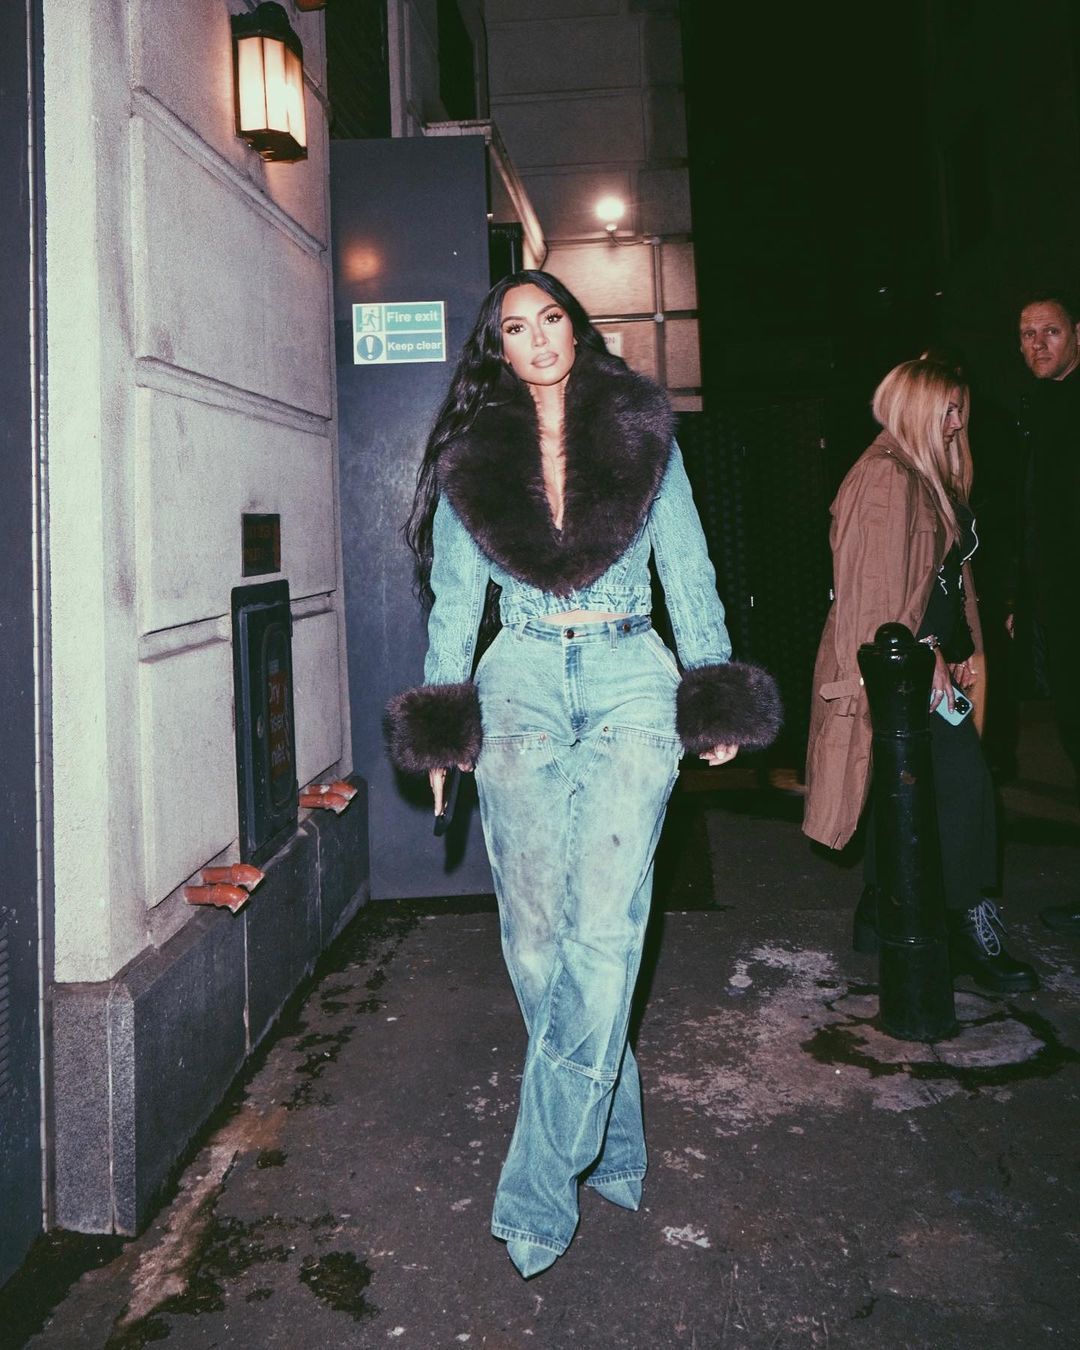 Kim Kardashian Parties in a Denim Suit with Fur in London